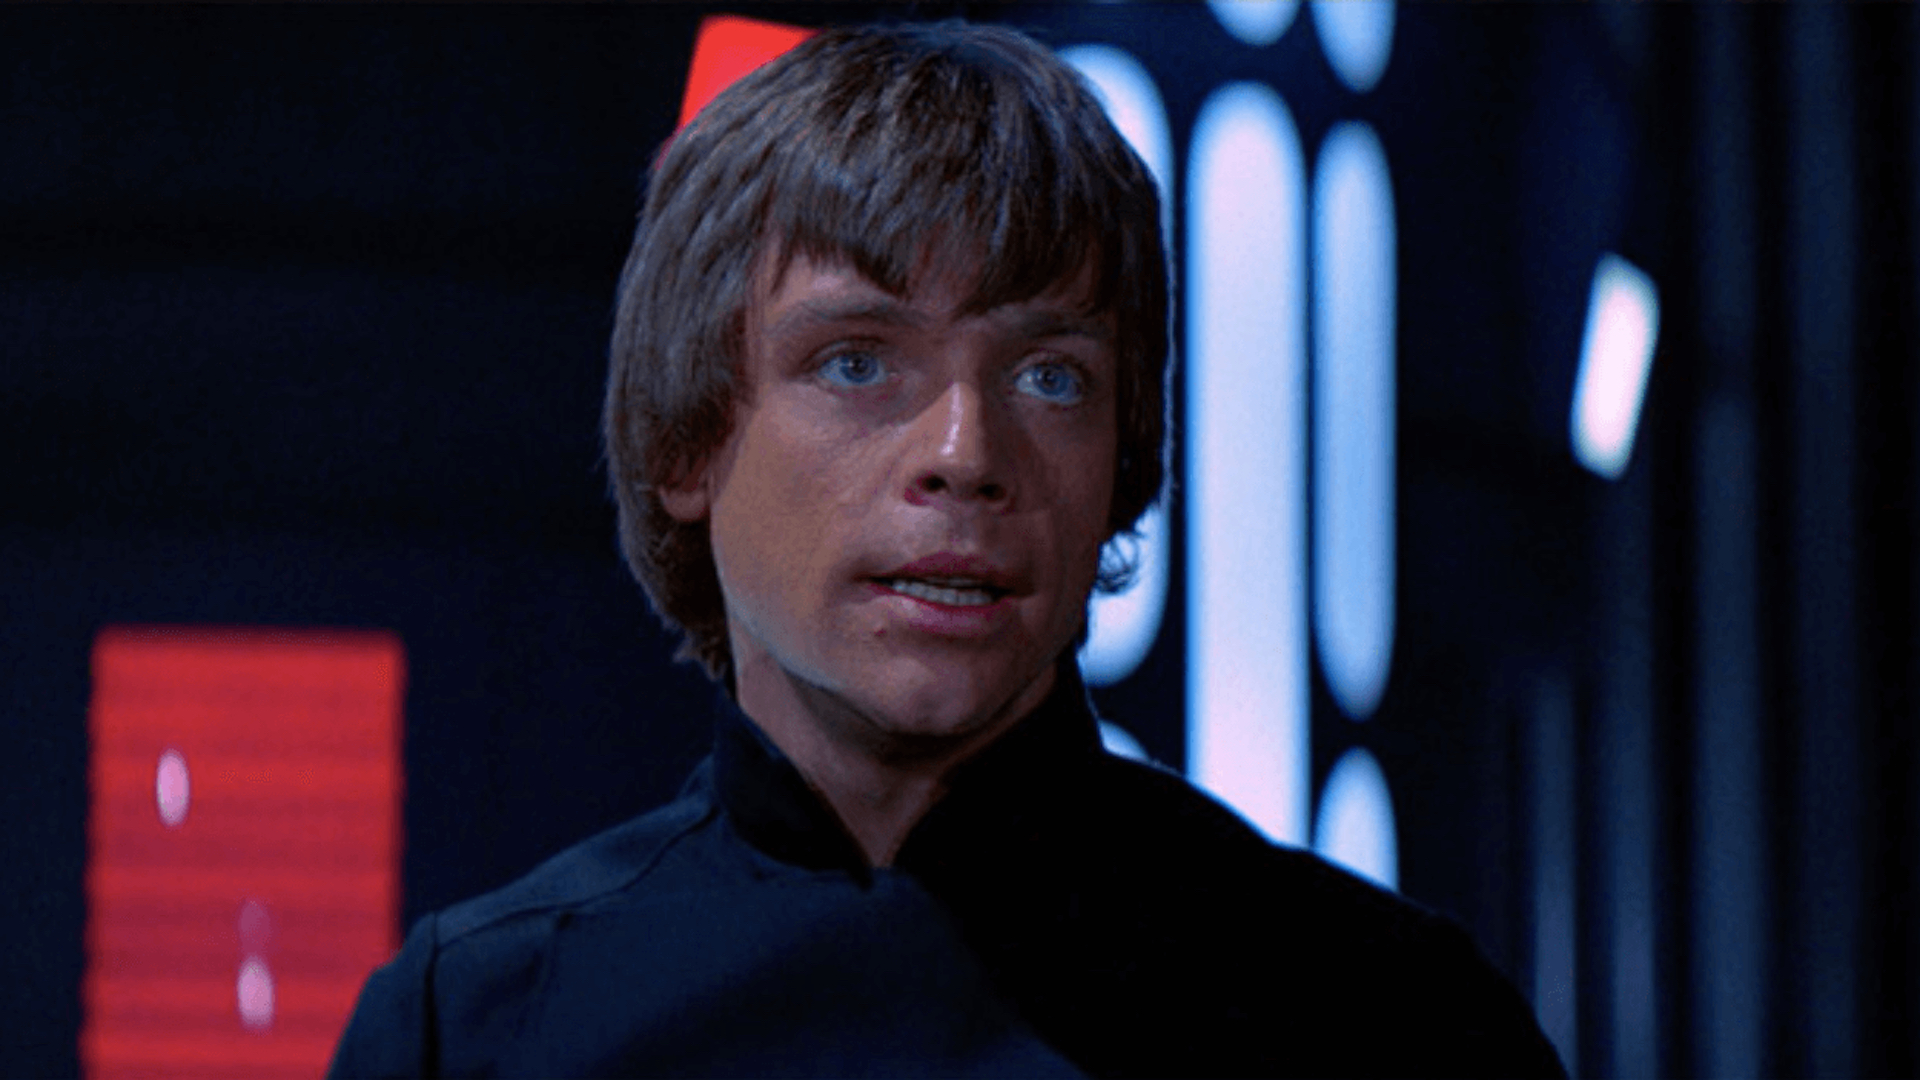 Luke Skywalker defies the Emperor in Return of the Jedi.